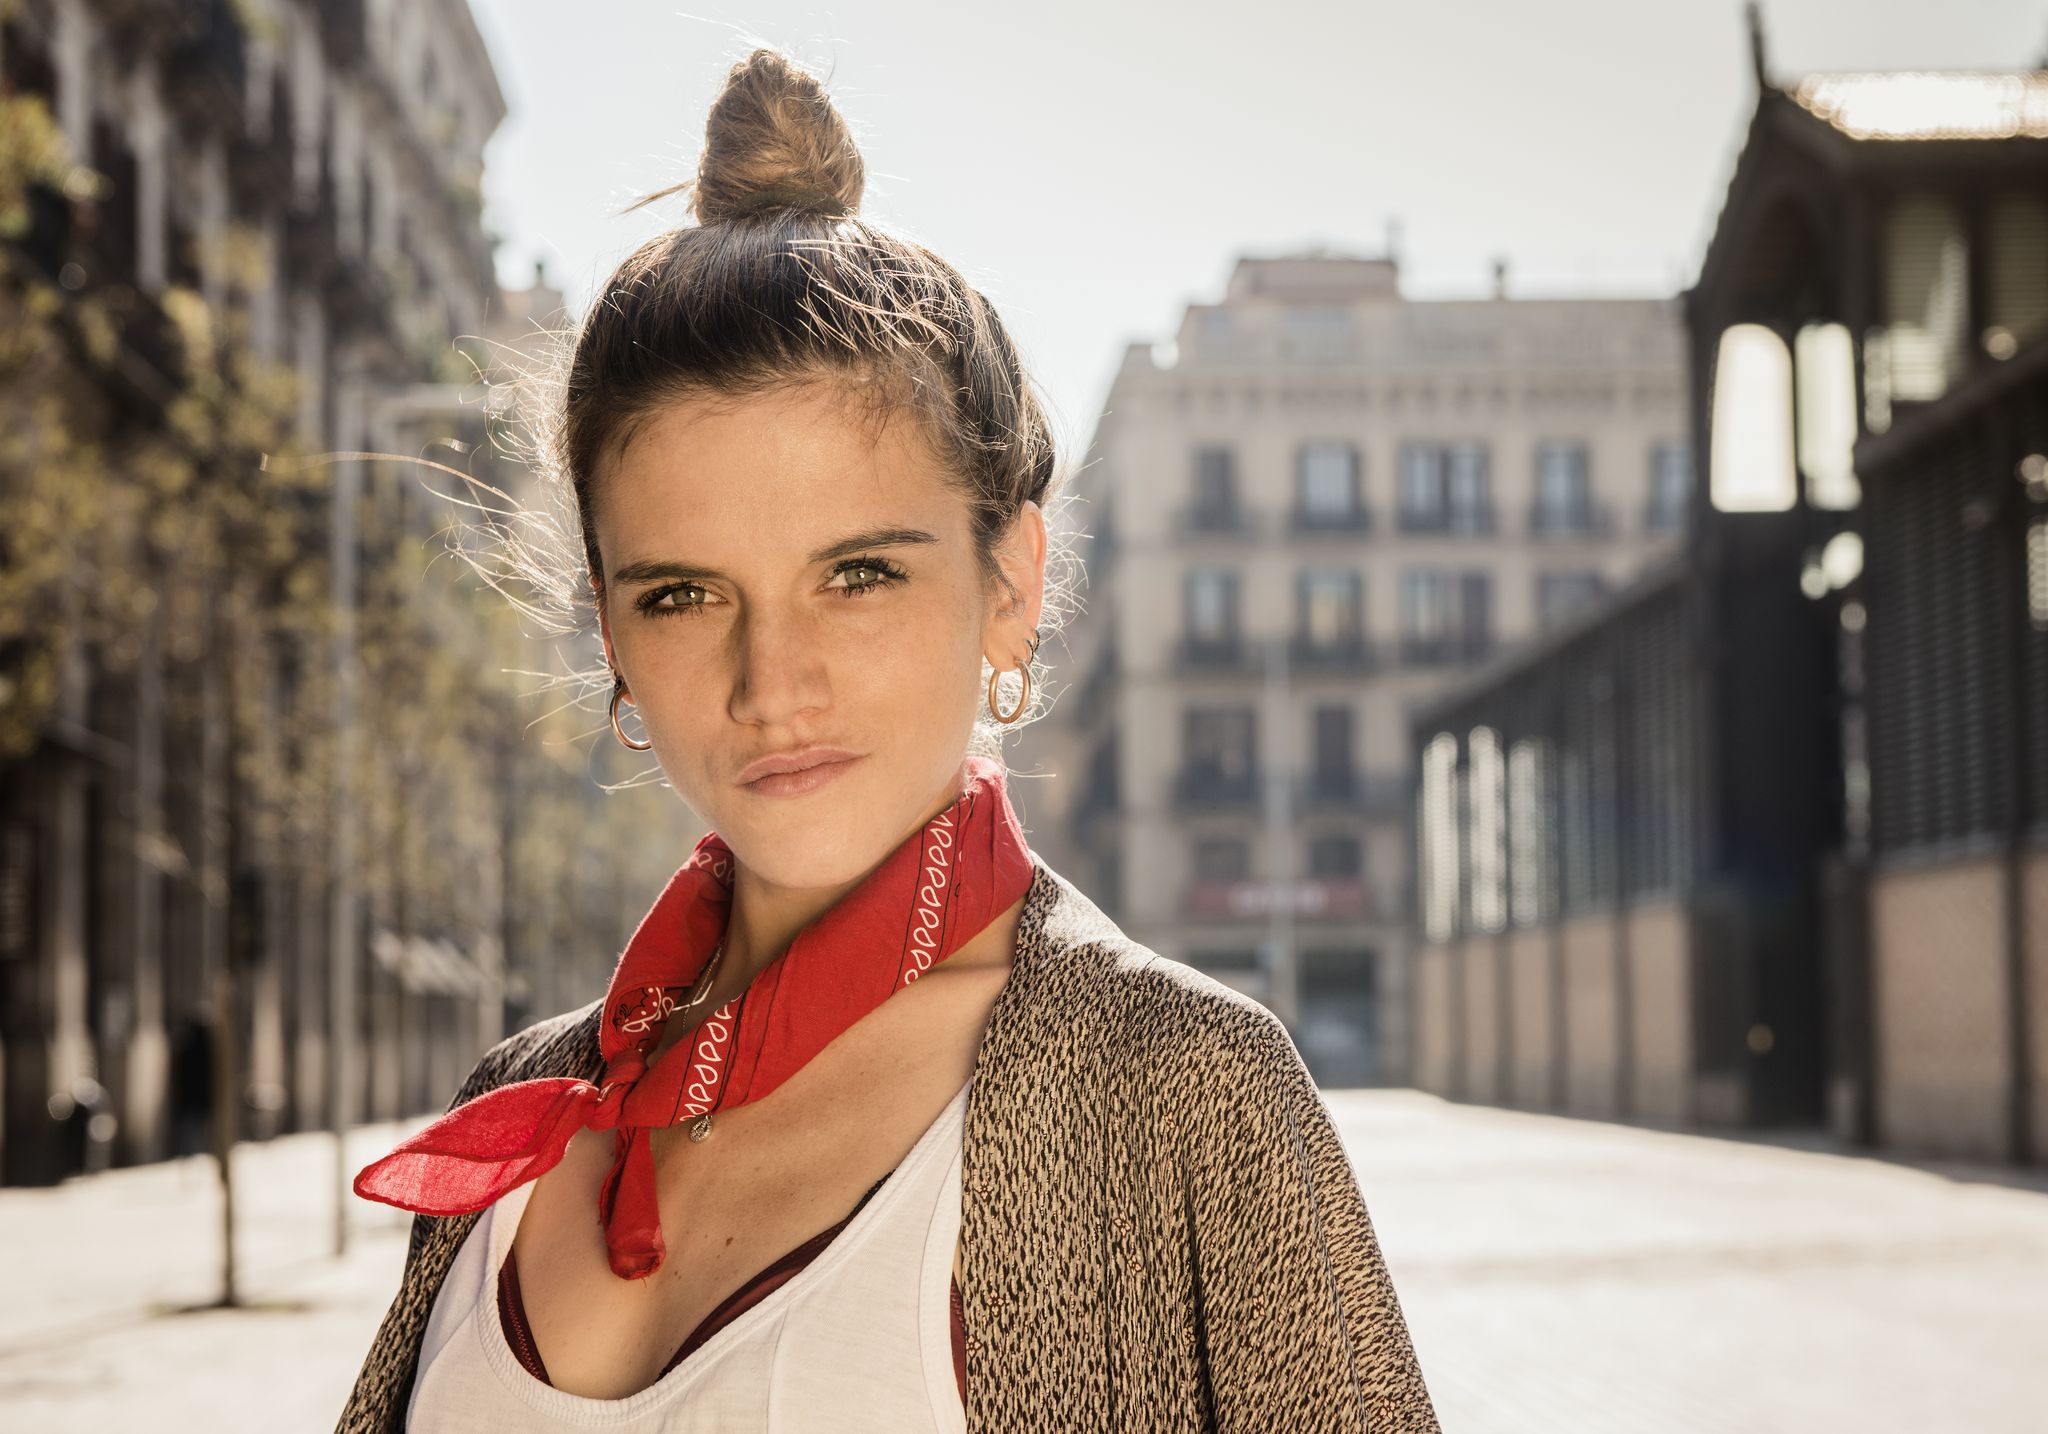 Young woman posing on street, El Born, Barcelona, Spain